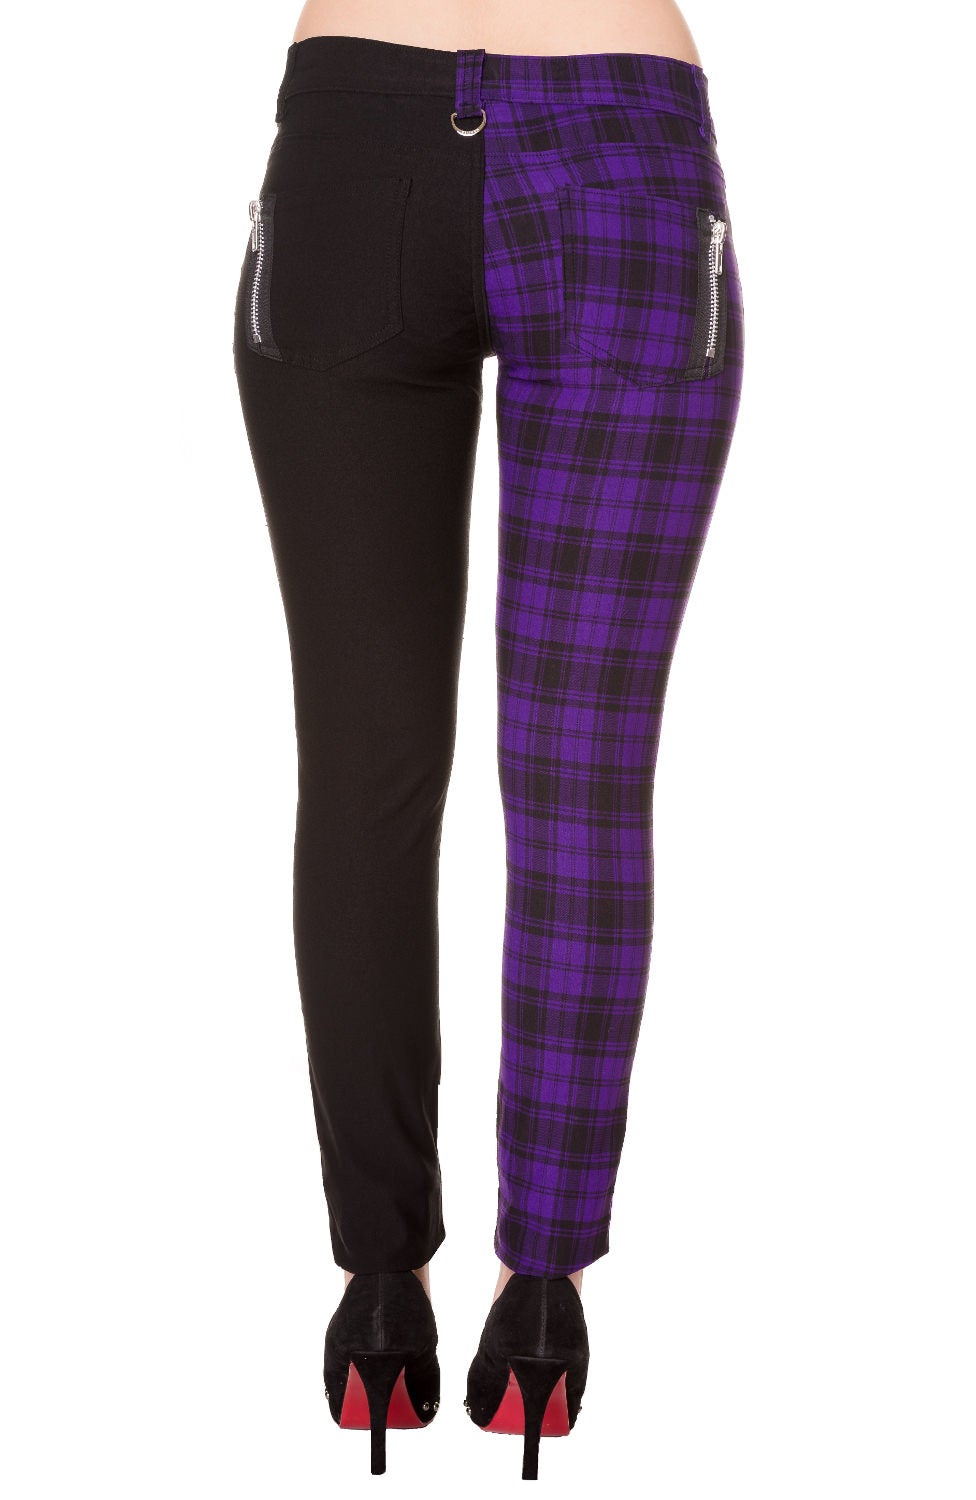 Purple tartan check trousers with one leg black, low rise. 